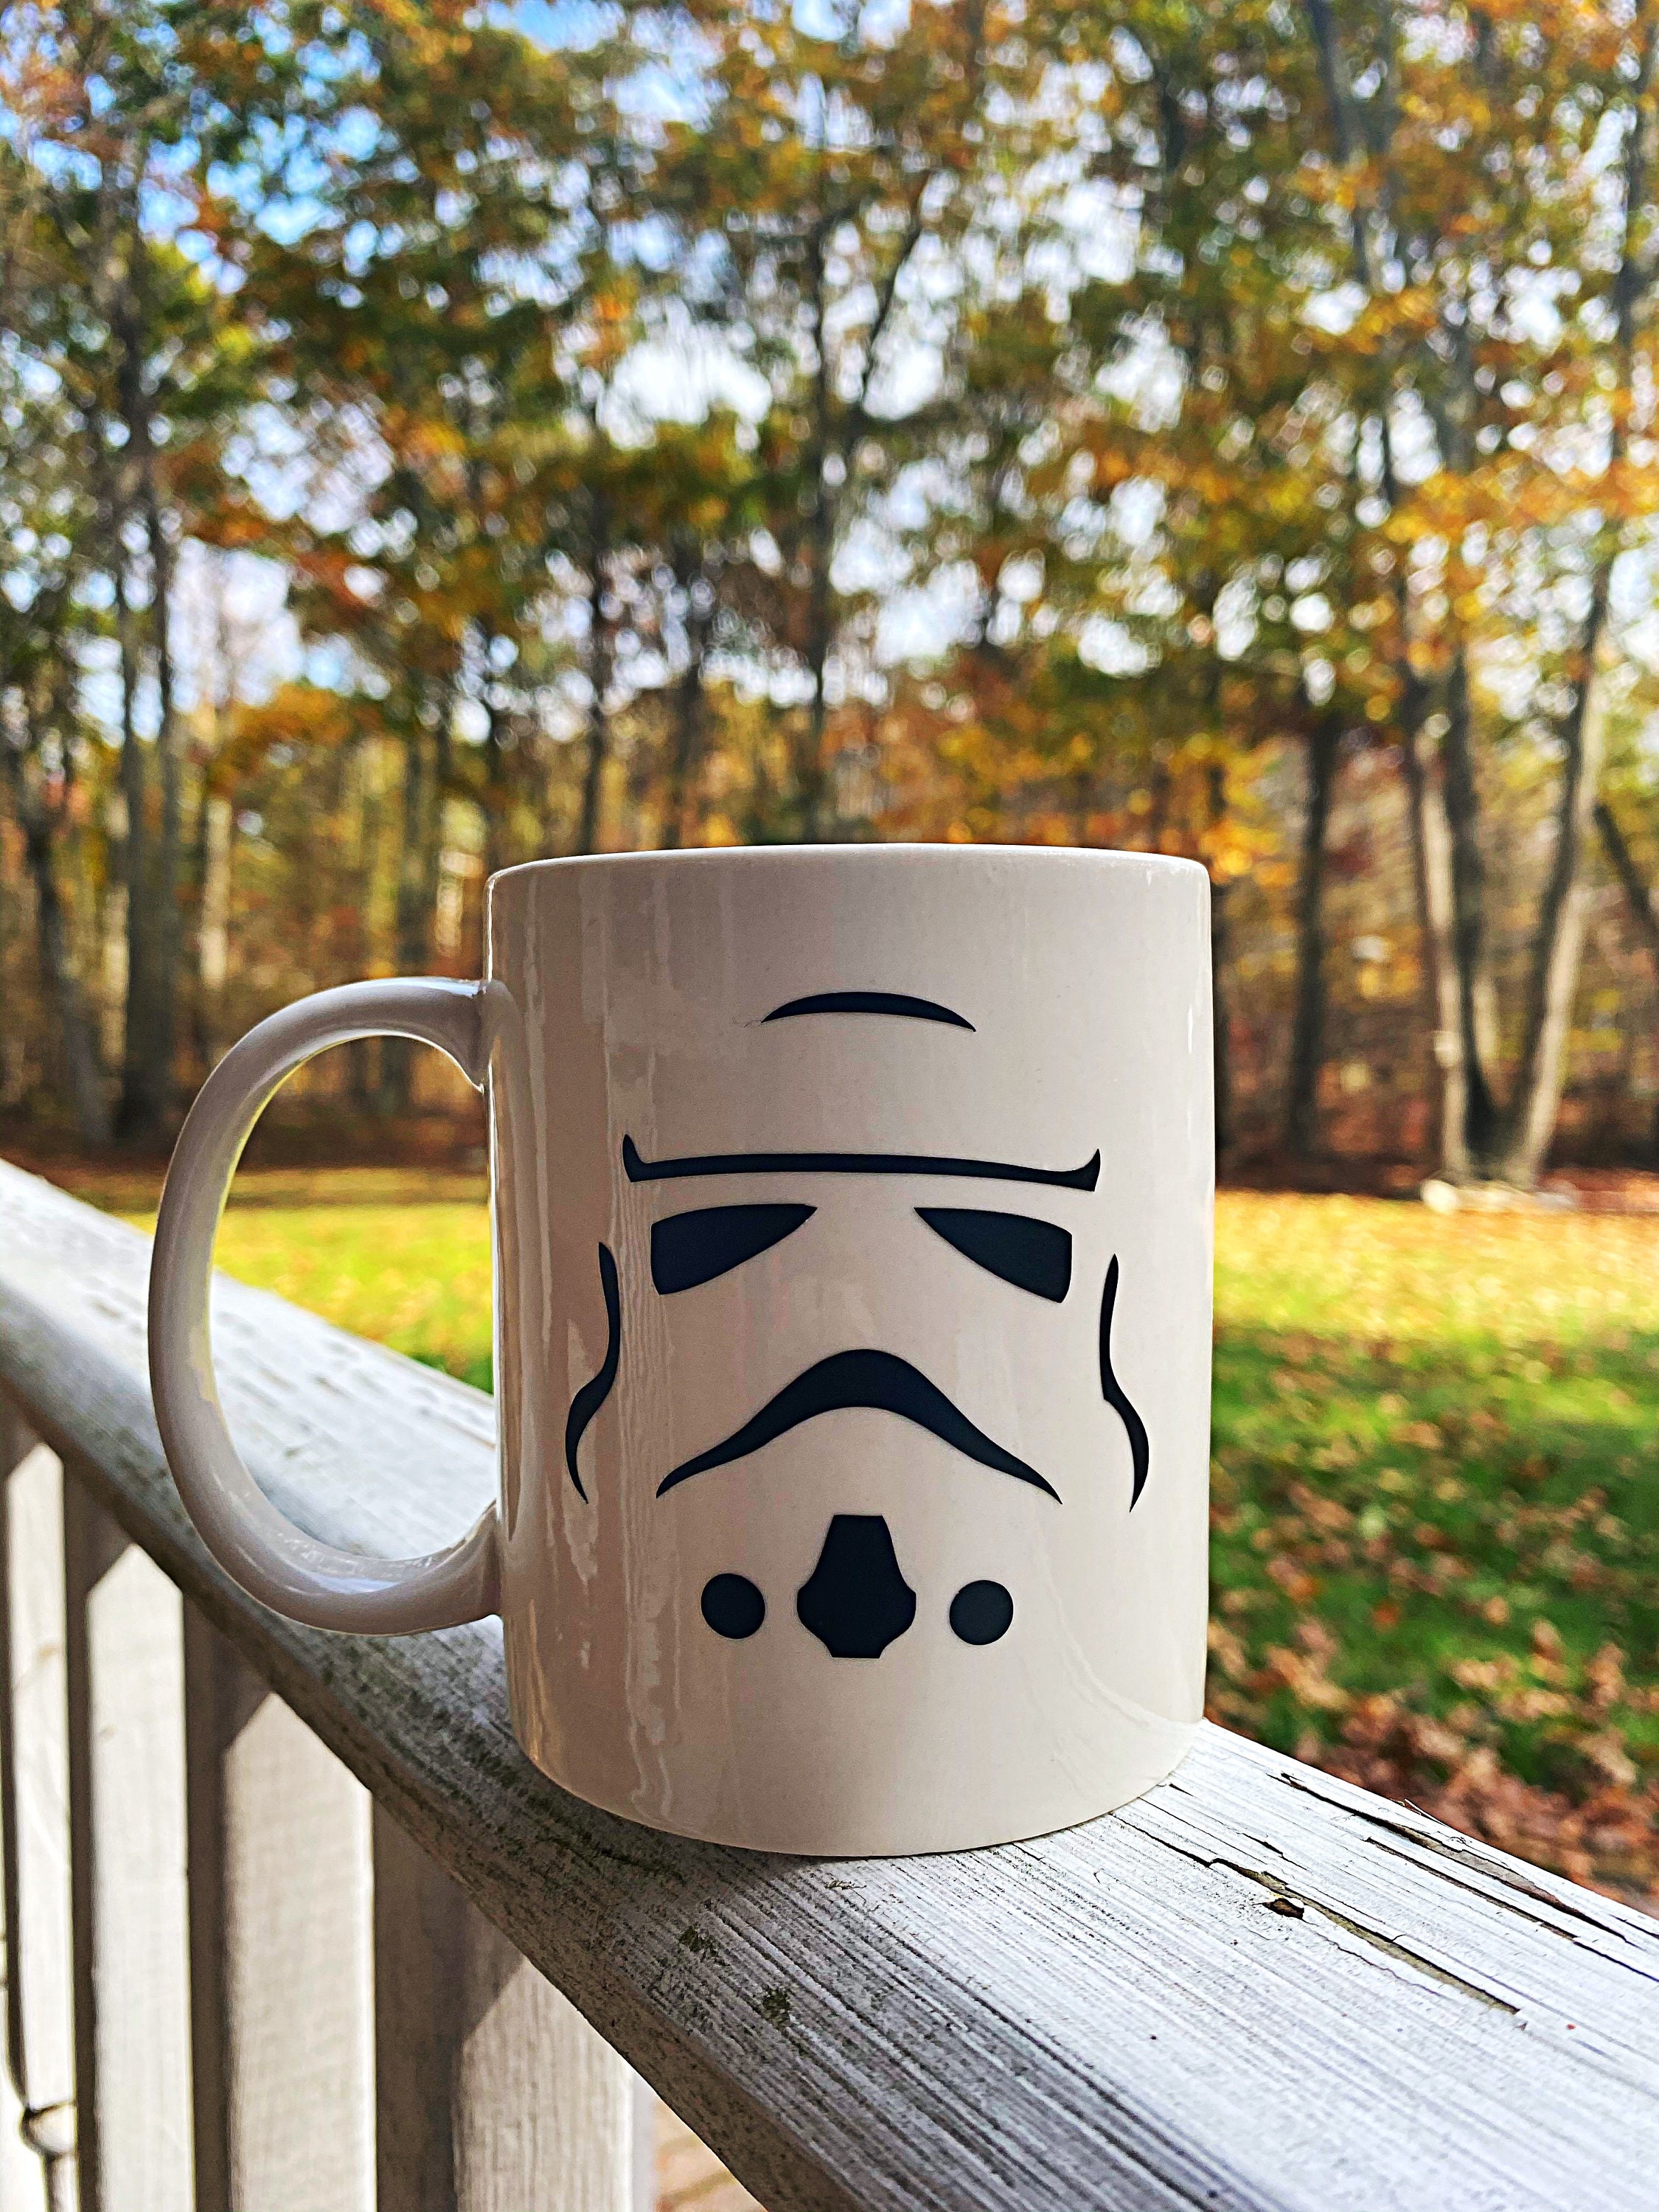 Star Wars Stormtrooper Mug. 10 oz. Half Moon Bay. Bath, England